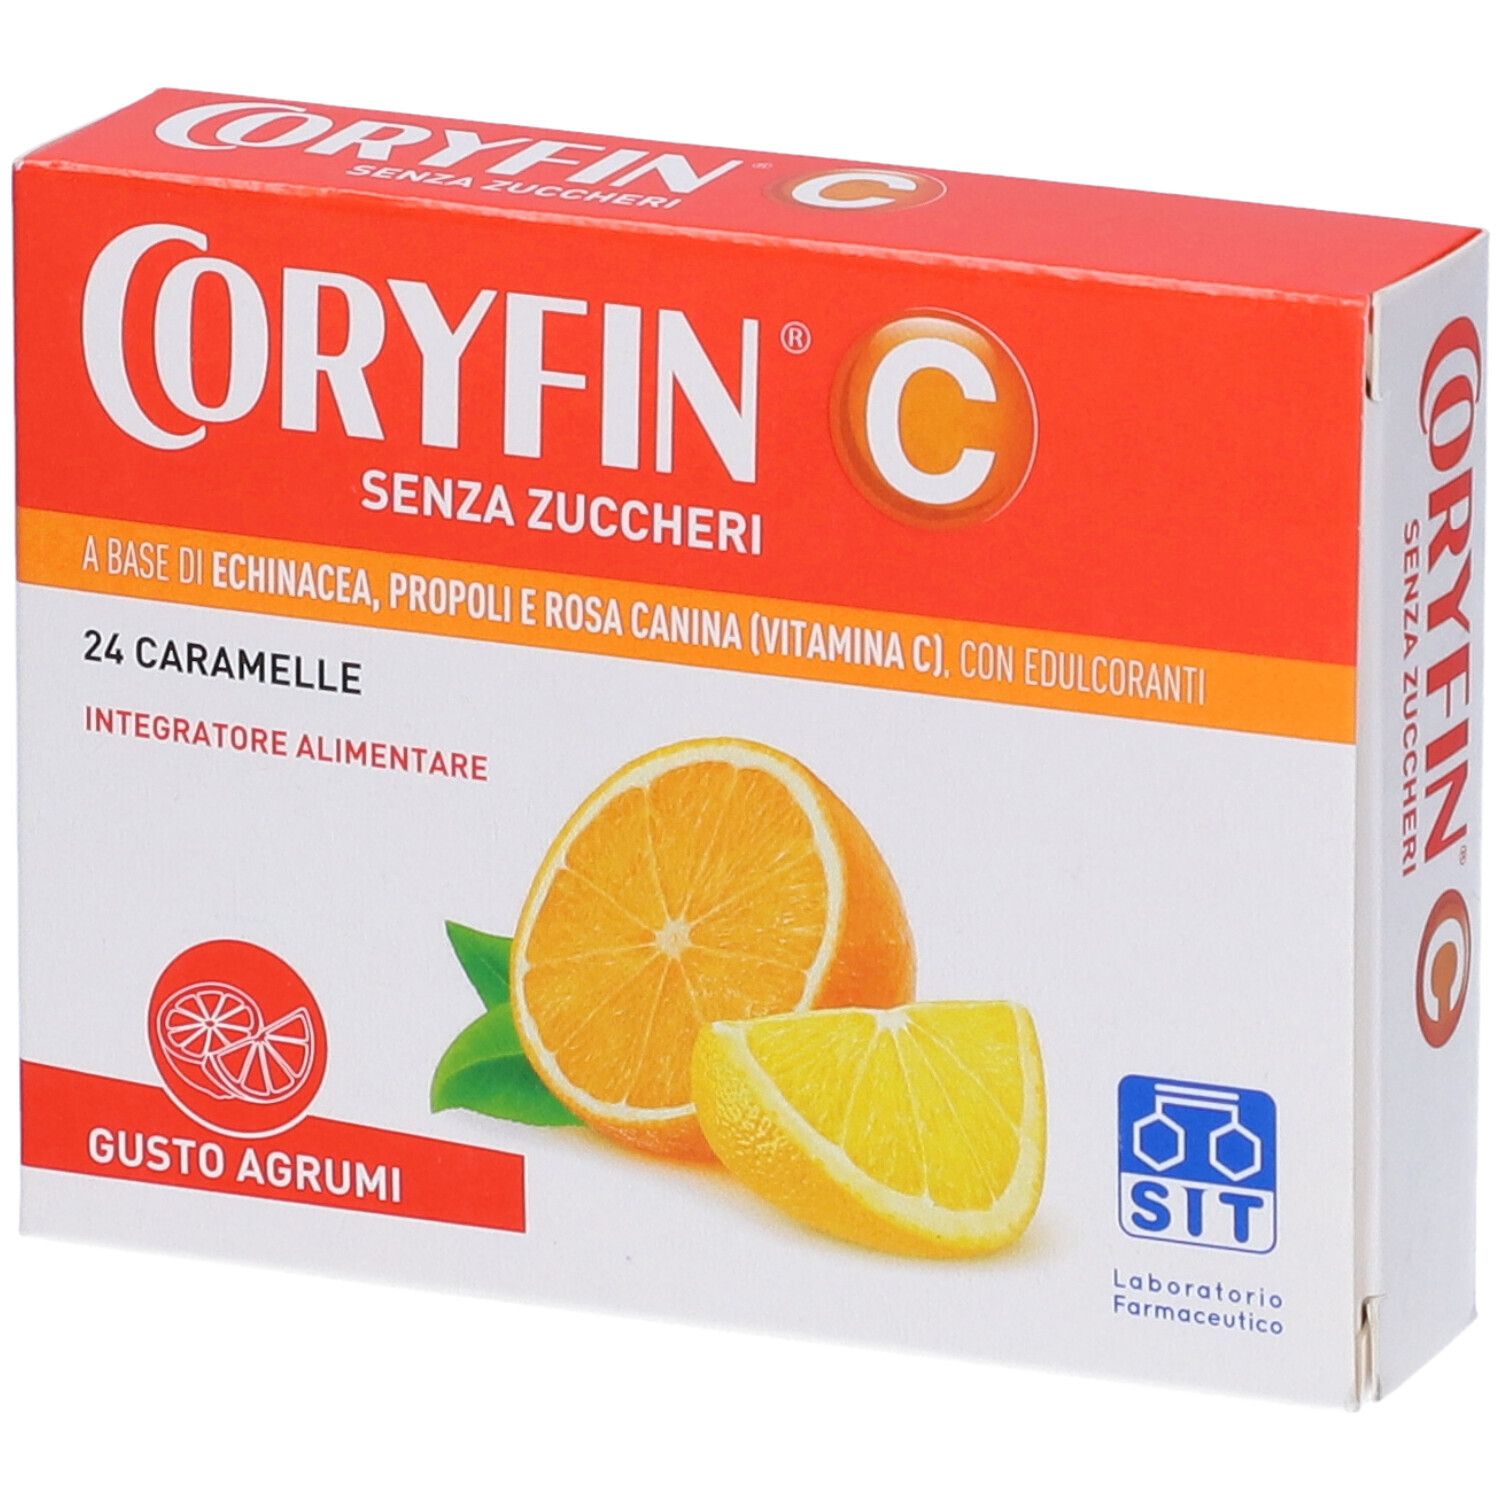 Coryfin® C Senza Zuccheri Gusto Agrumi